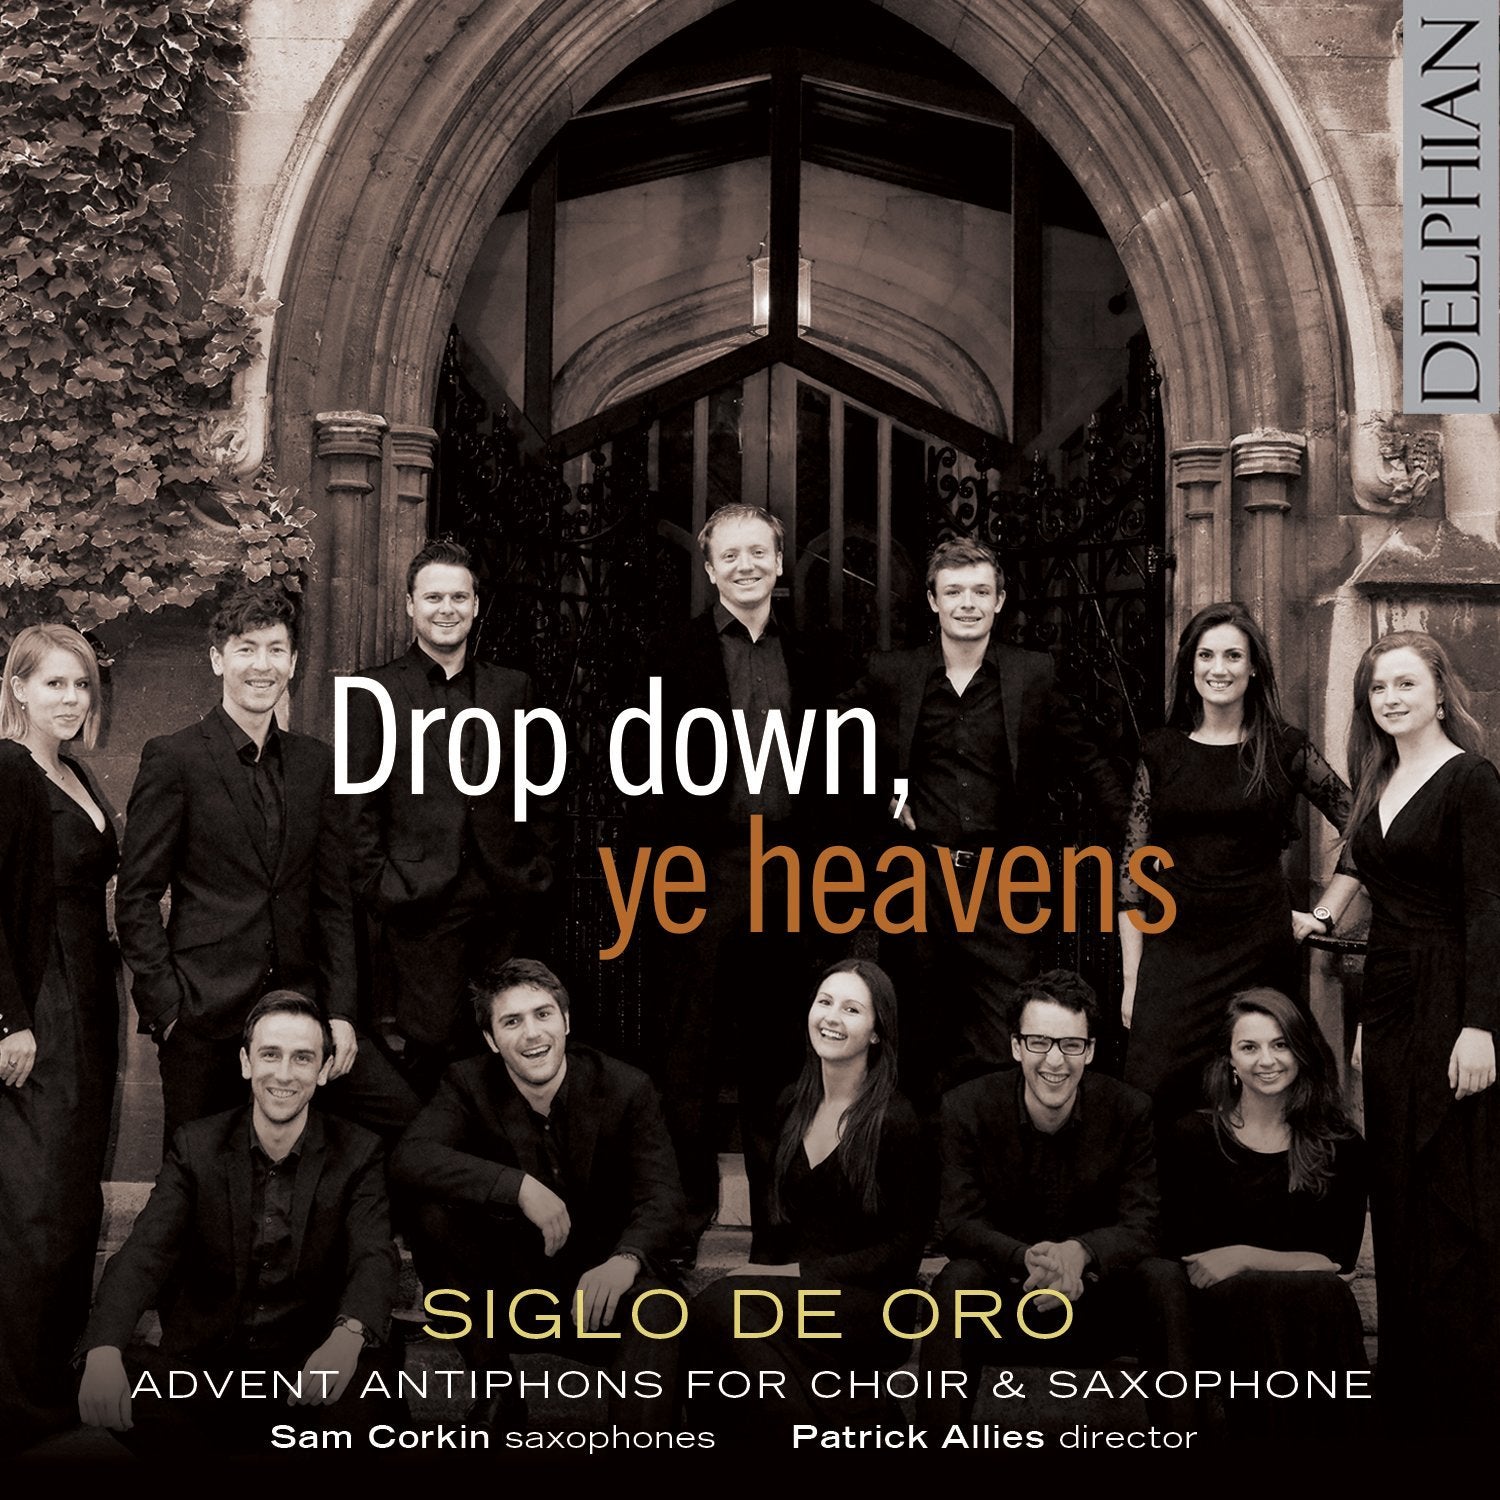 Drop down, ye heavens: Advent antiphons for choir & saxophone CD Delphian Records